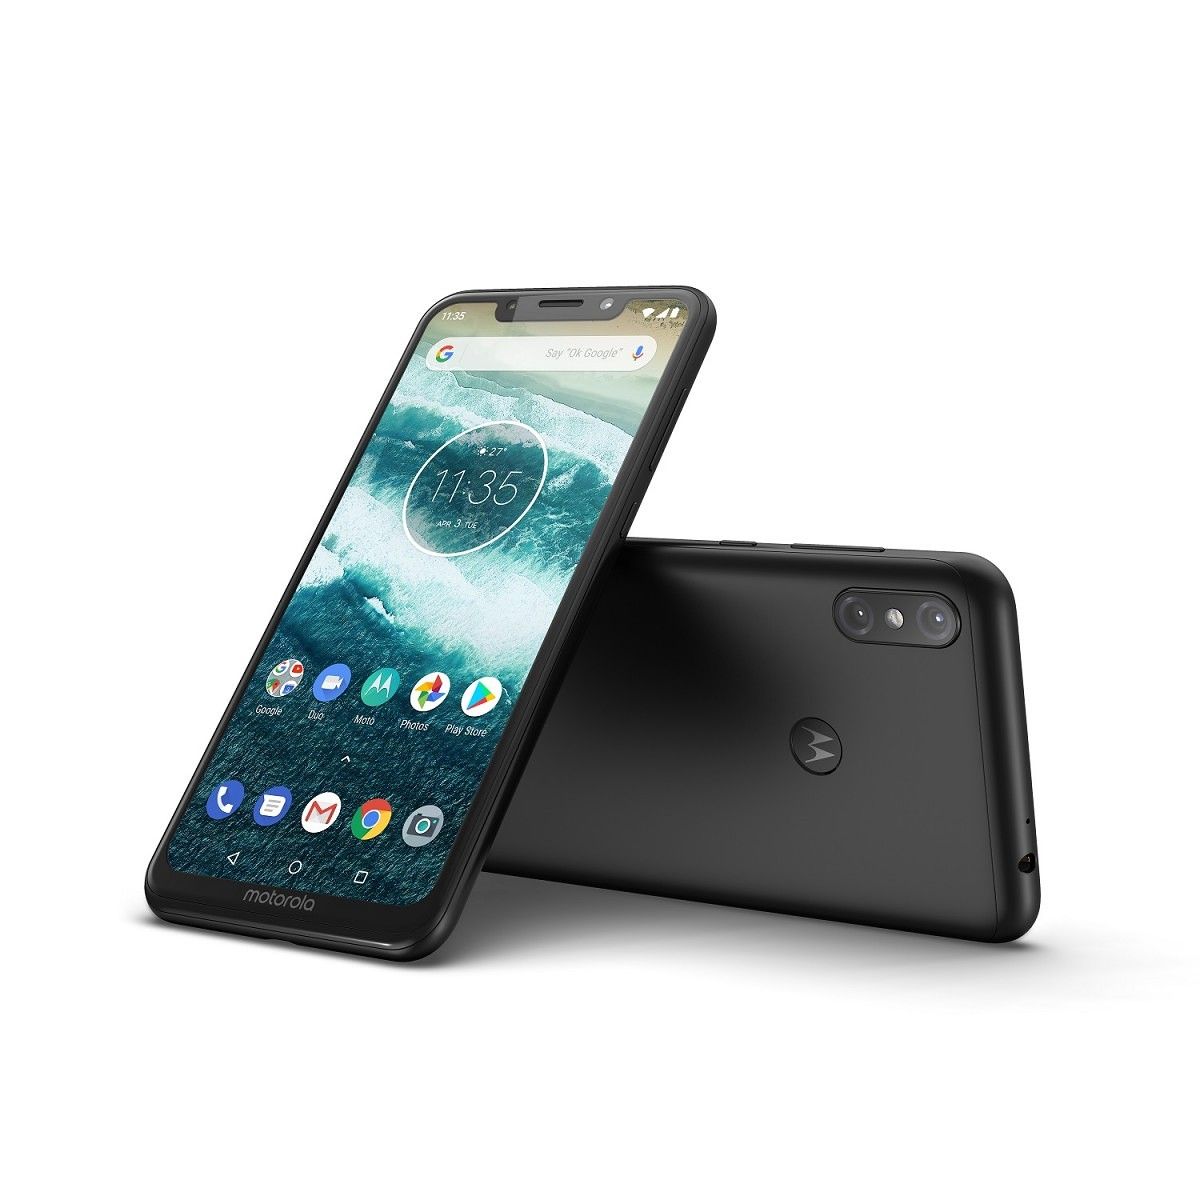 Motorola One Power Android One smartphone